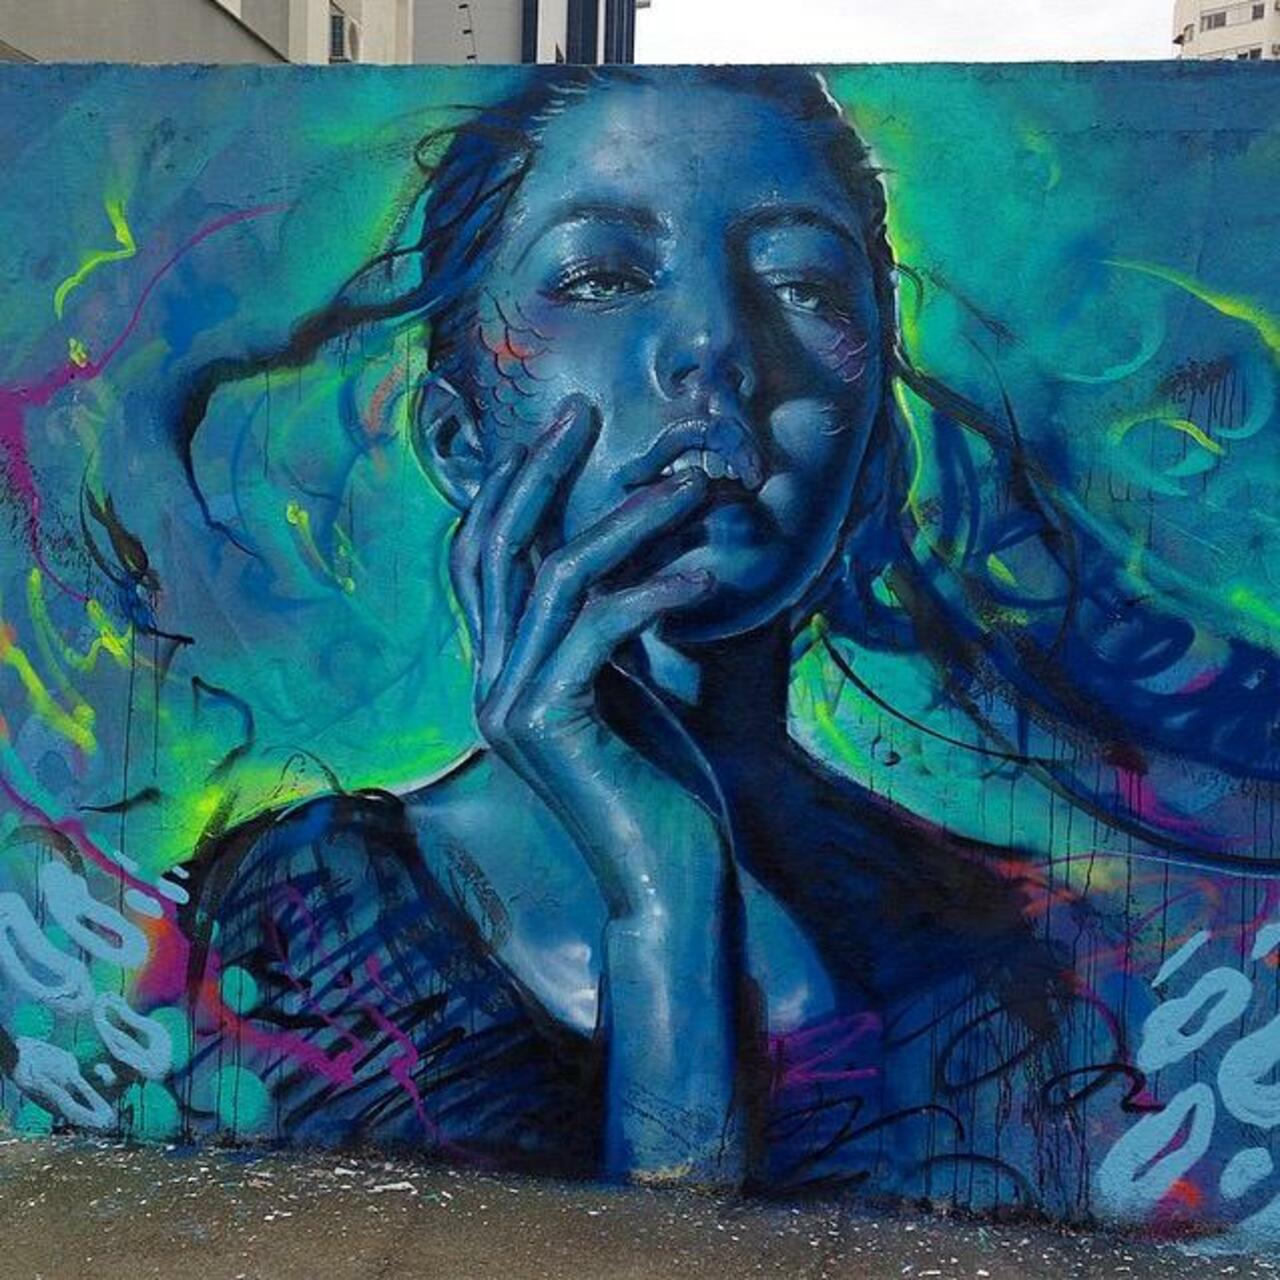 RT @artlife365: Thiago Valdi new Street Art piece titled 'Day Dreamer'

#art #mural #graffiti #streetart http://t.co/Yuxfeaqj9p